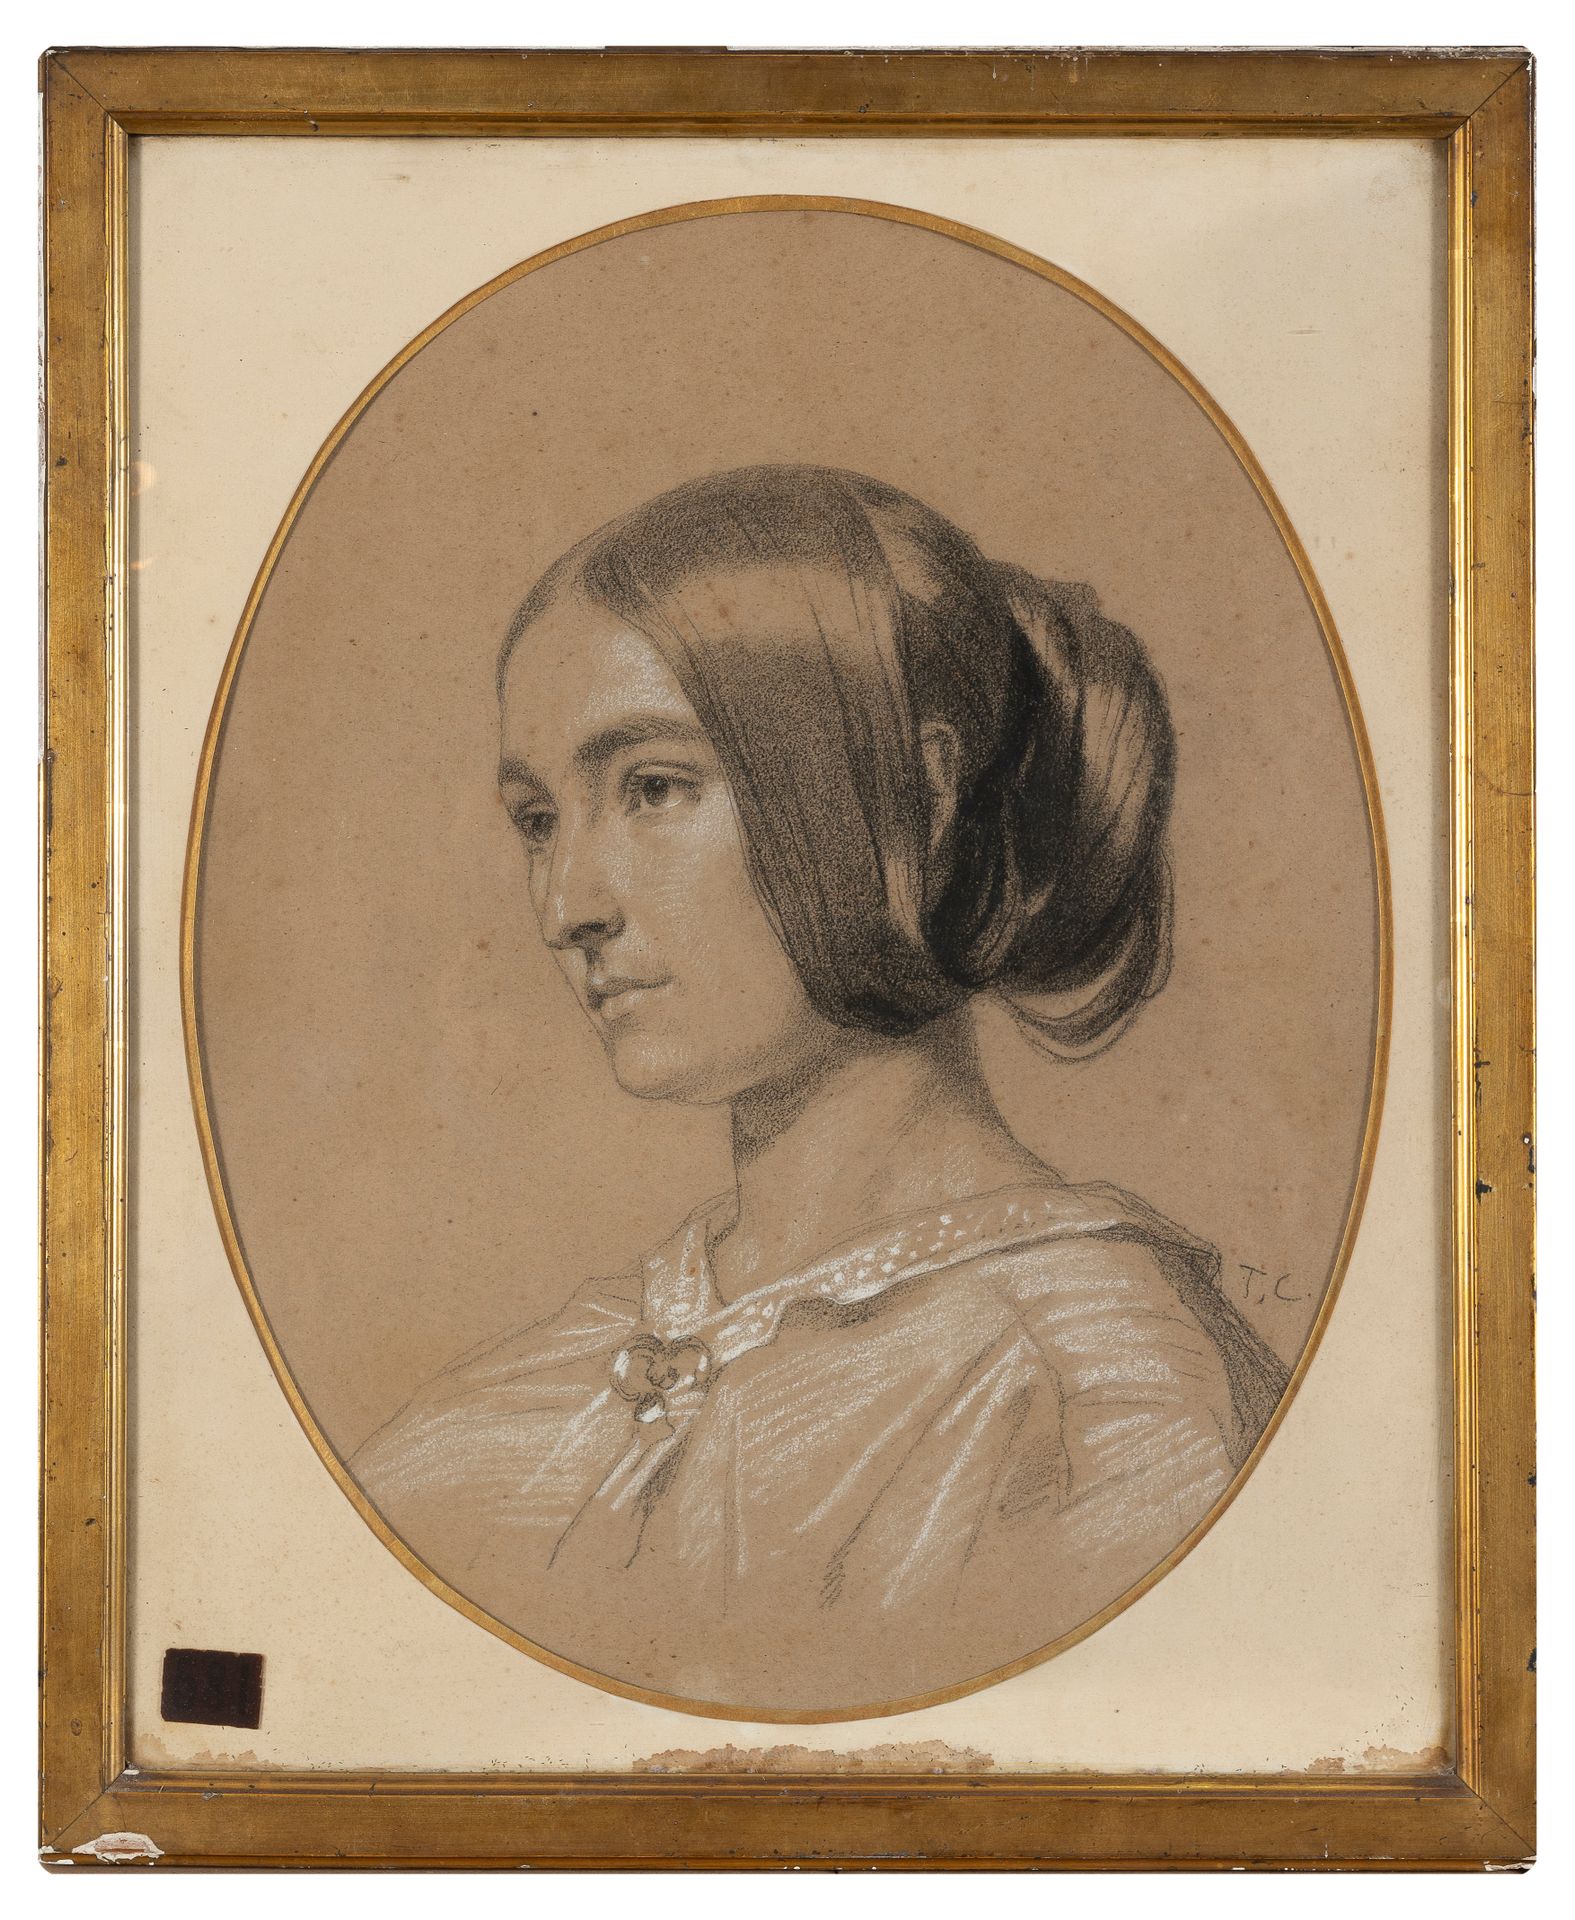 Null 托马斯-库图尔（1815-1879），归属于

一个年轻女孩的画像

椭圆形粉彩画，右下方有 "T.C "字样。

根据专业知识进行估算